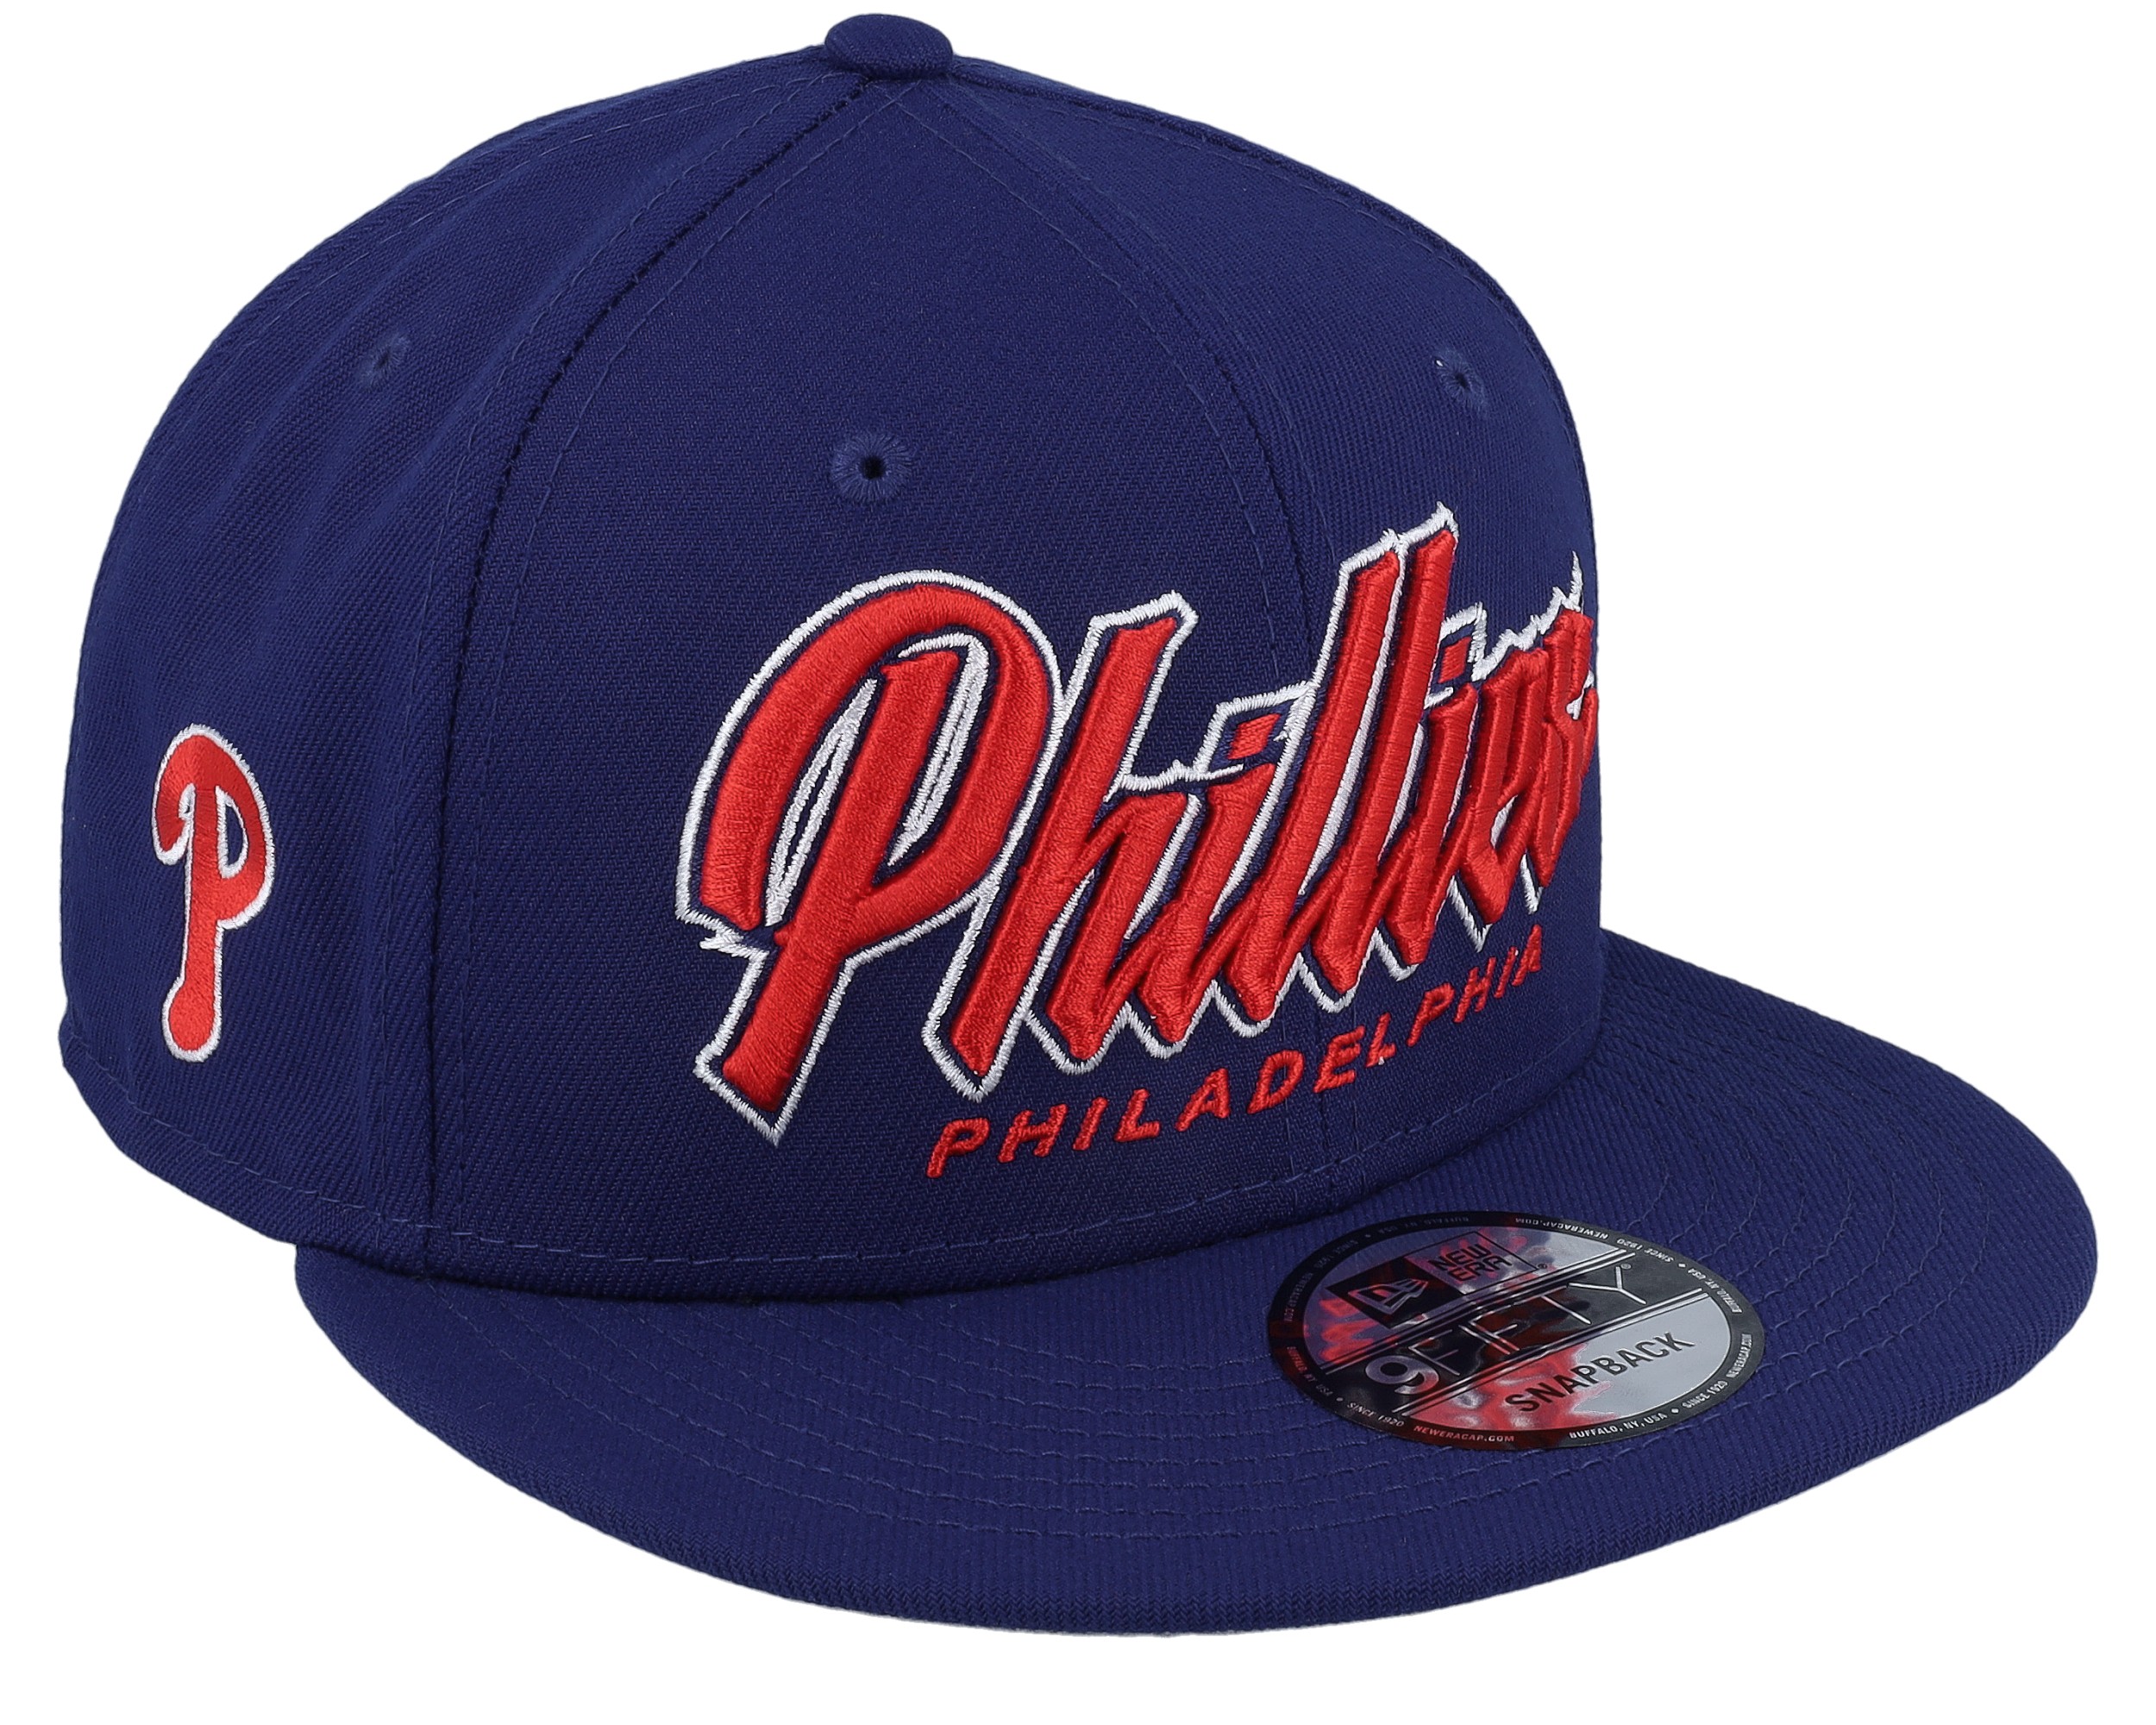 Philadelphia Phillies Caps & Hats Online - Hatstore.ae